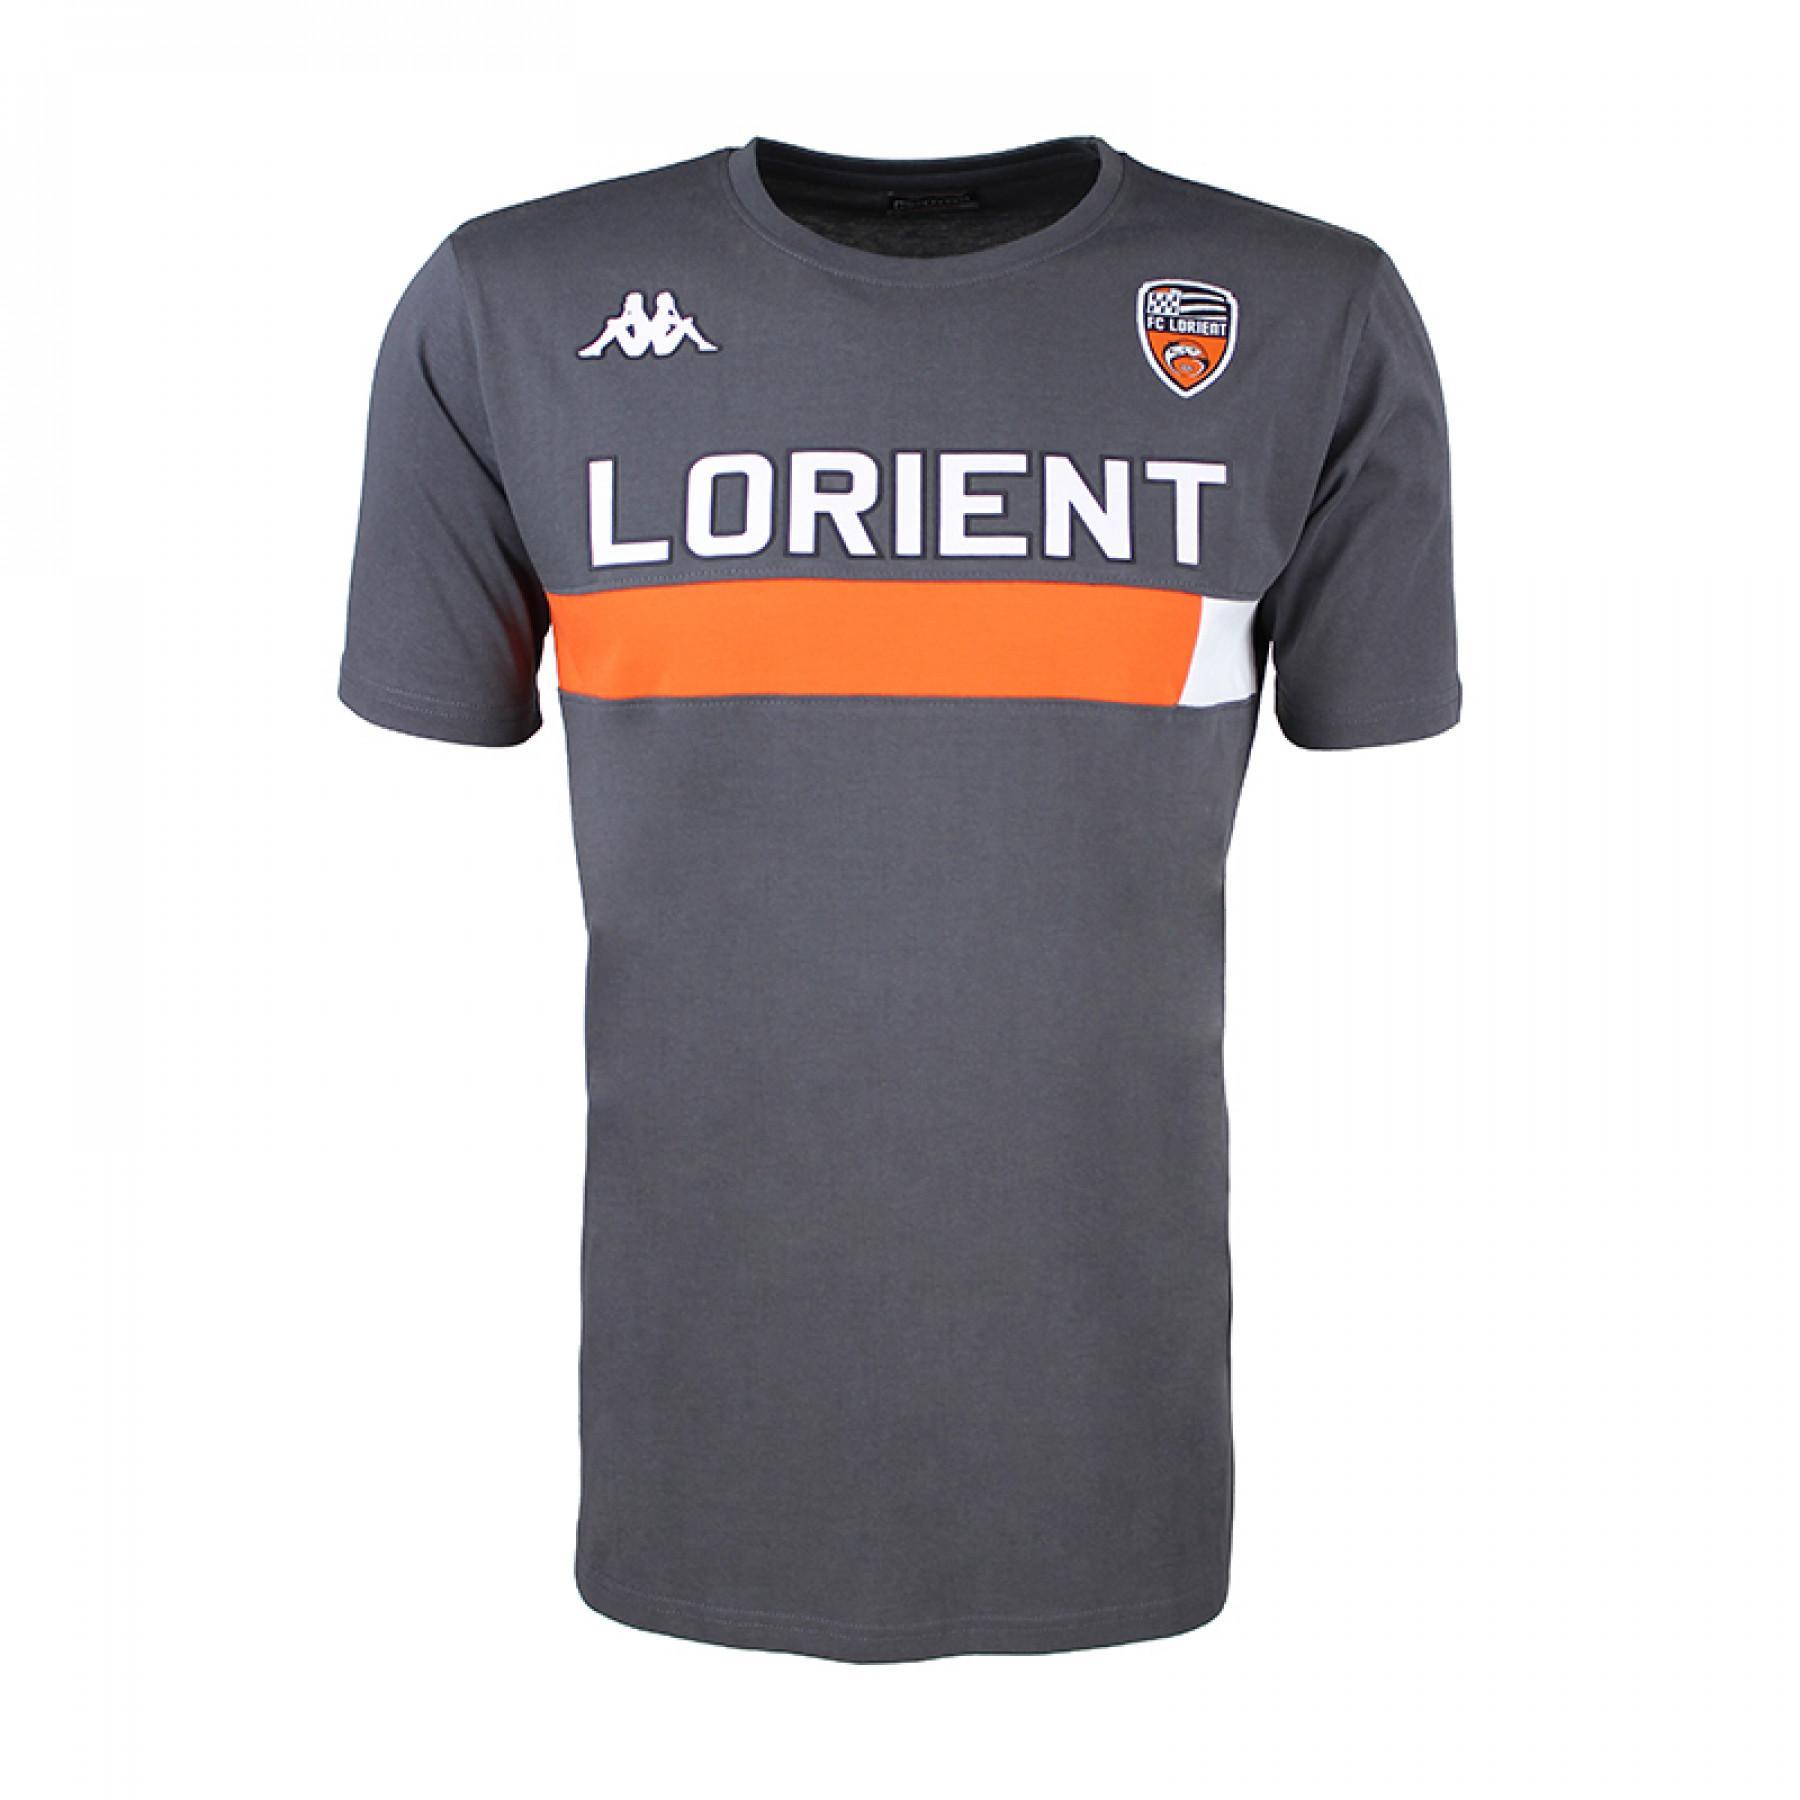 lorient t-shirt 2018/19